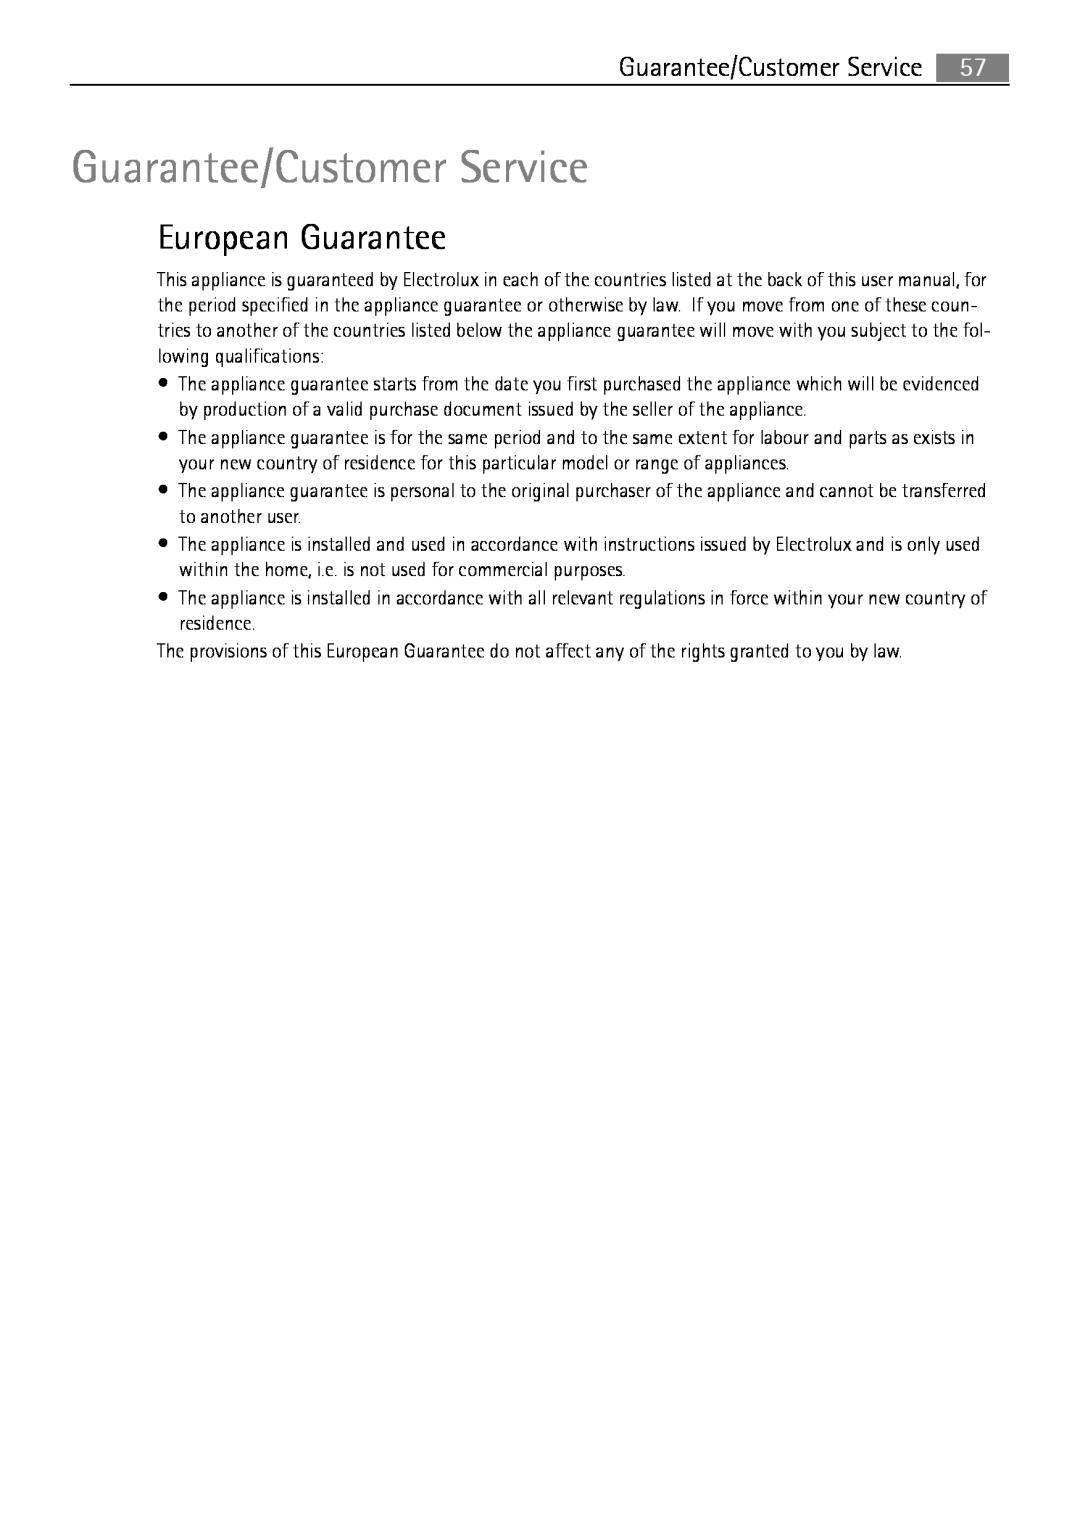 Electrolux E43012-5 user manual Guarantee/Customer Service, European Guarantee 